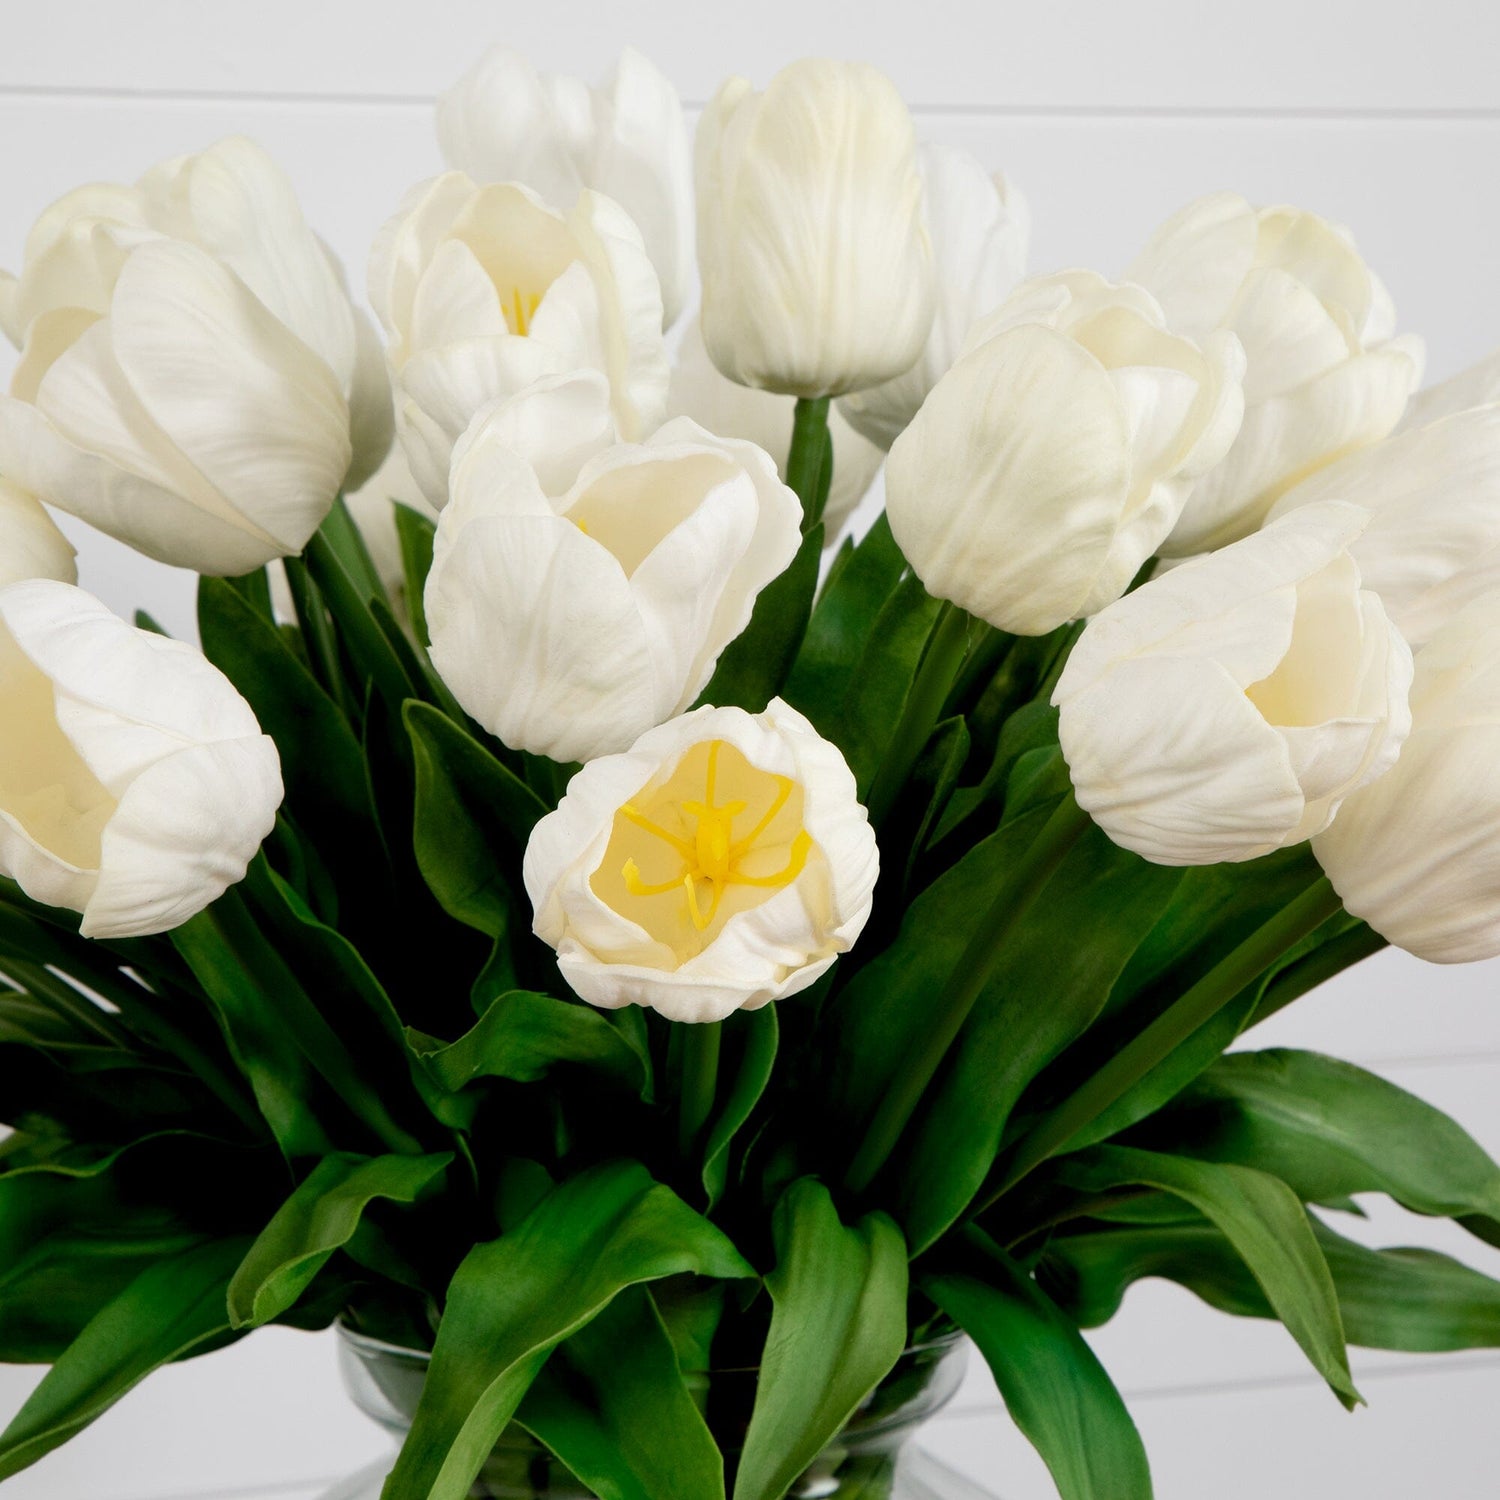 Signature Collection 24” Tulip Artificial Arrangement in Glass Vase